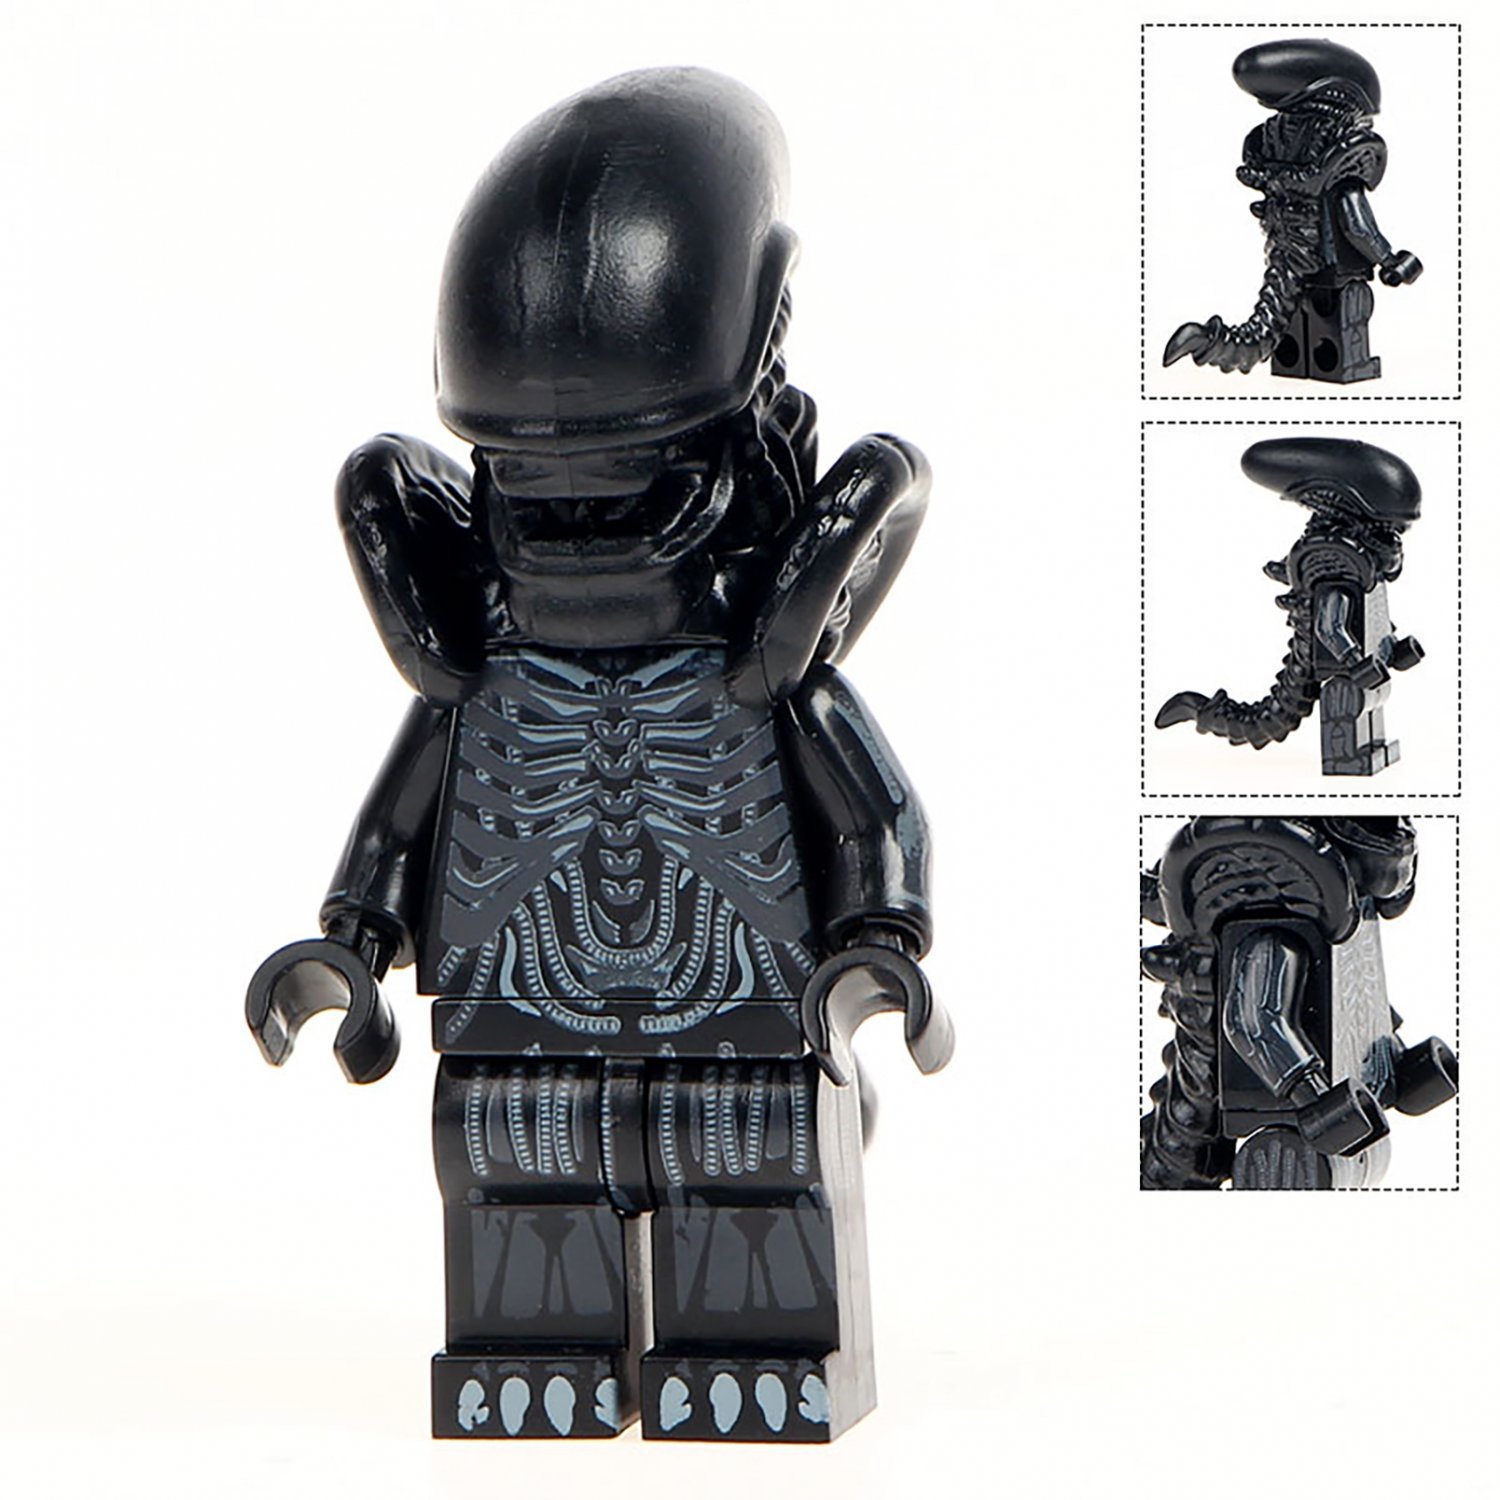 Minifigure Alien Horror Movie Lego compatible Building Blocks Toys